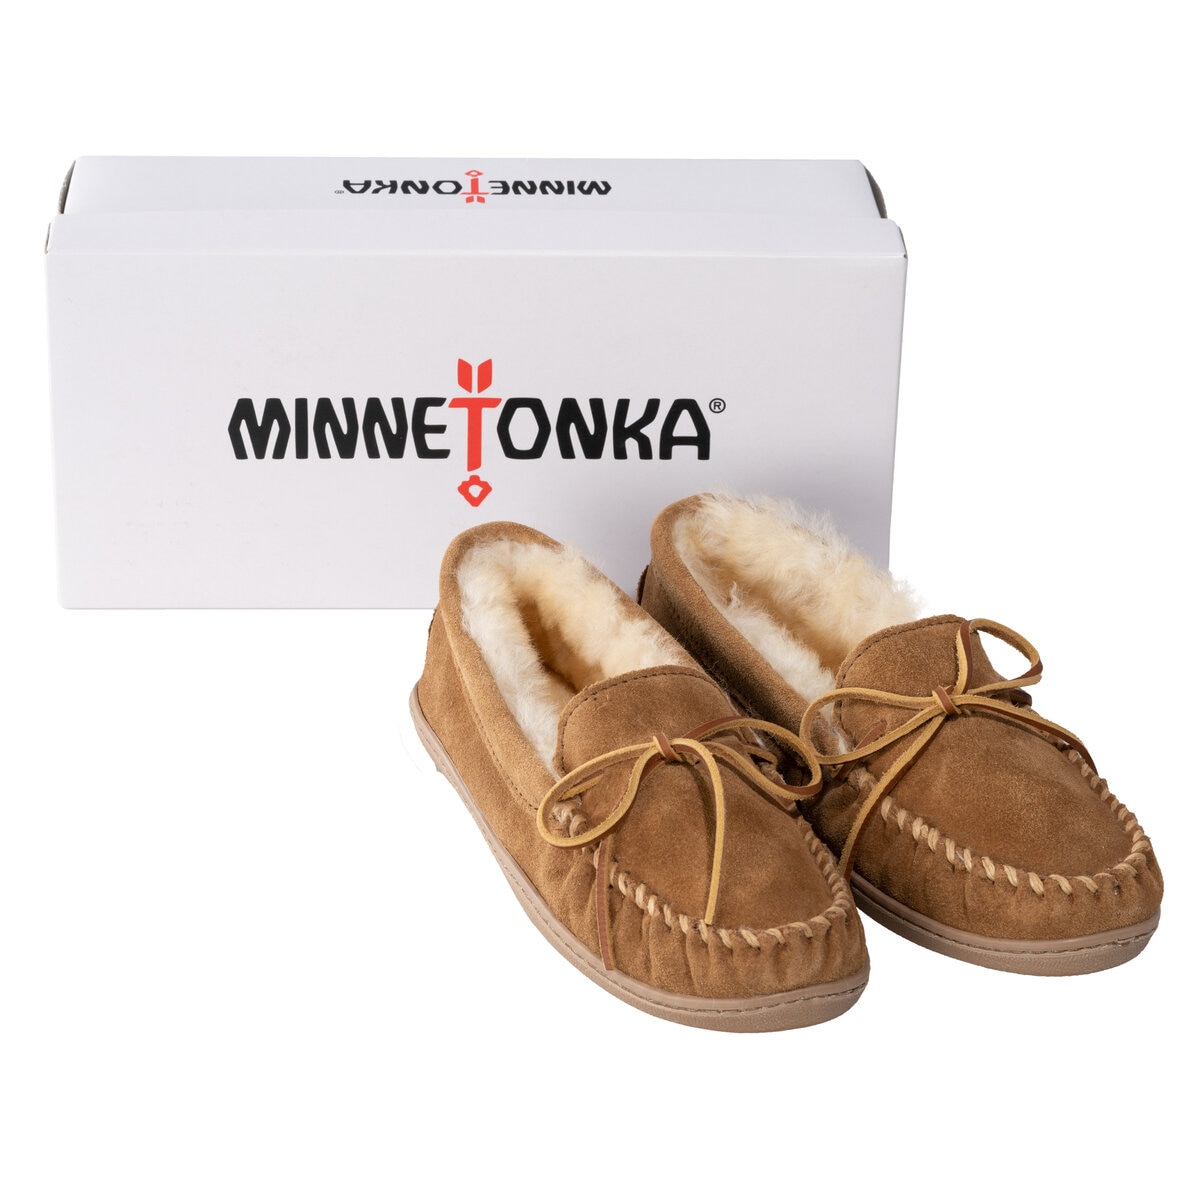 MINNETONKA : ミネトンカ ブラック US7 新品 モカシン - 靴